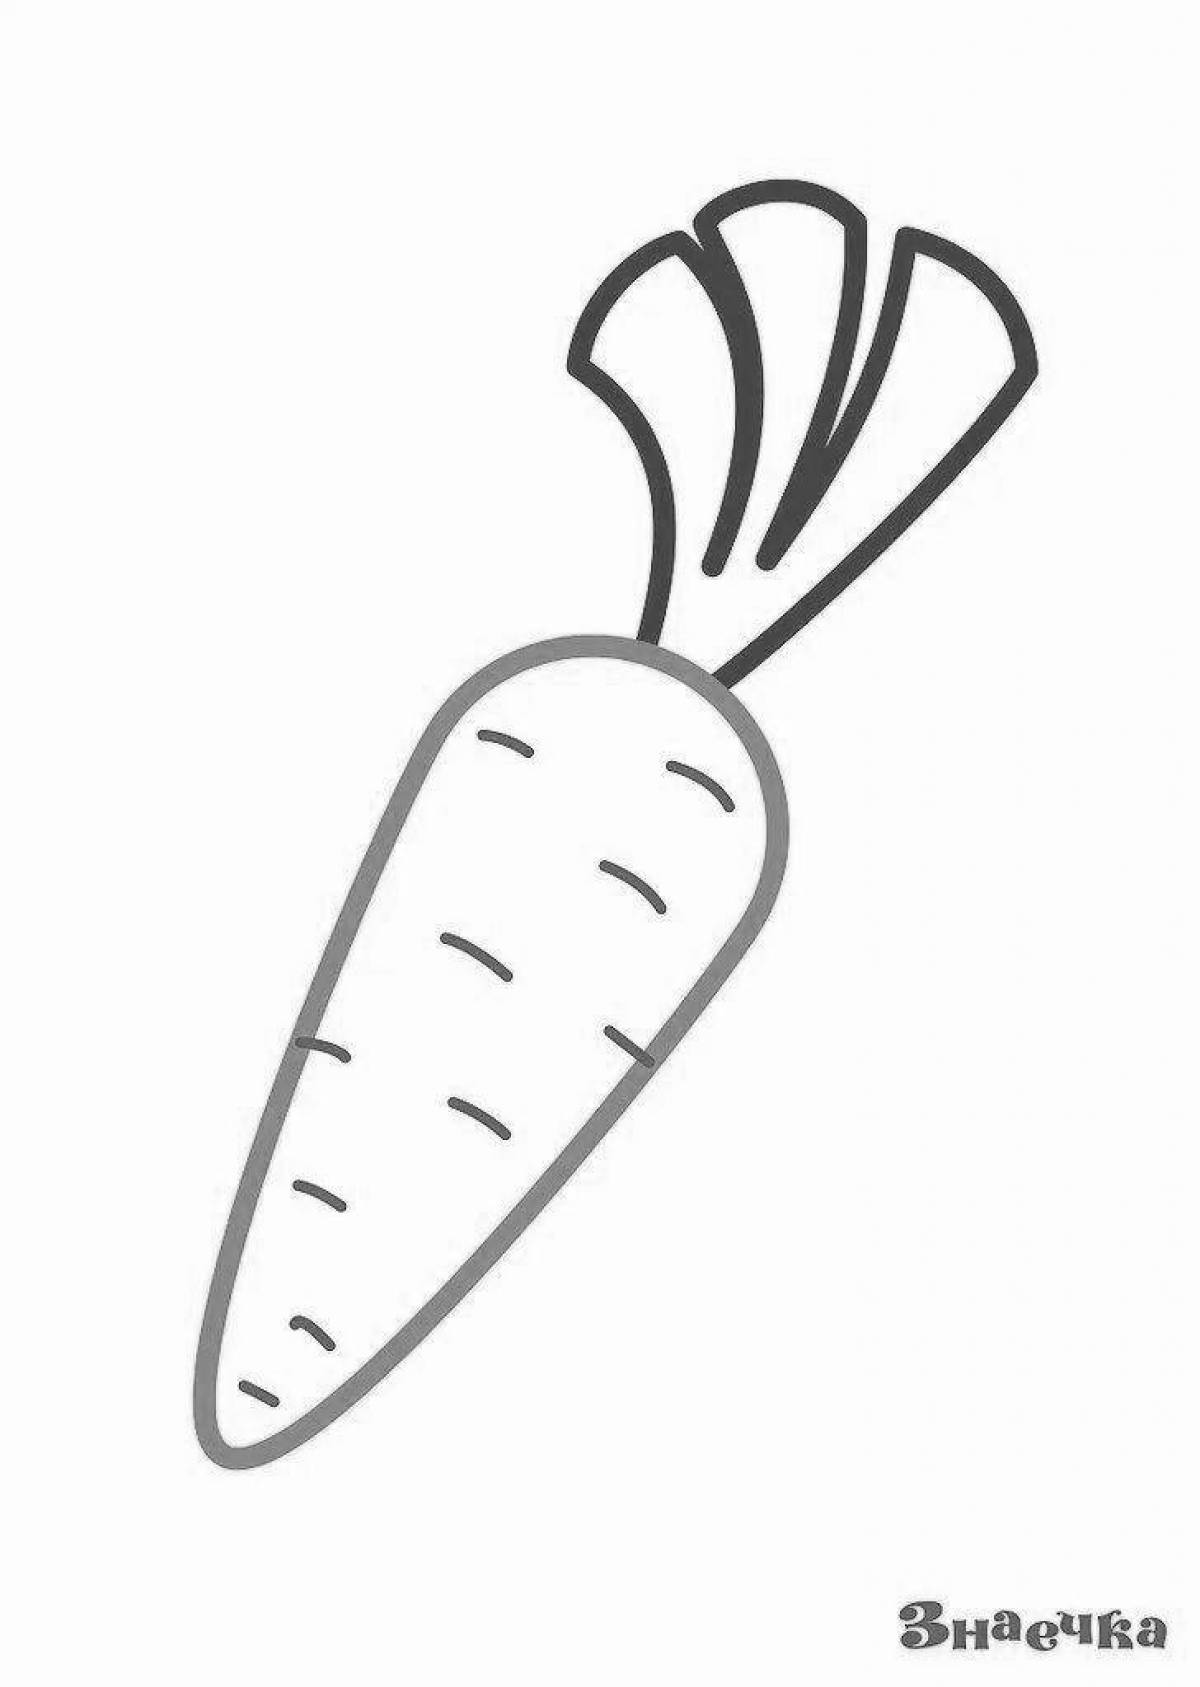 Delicious carrot sketch